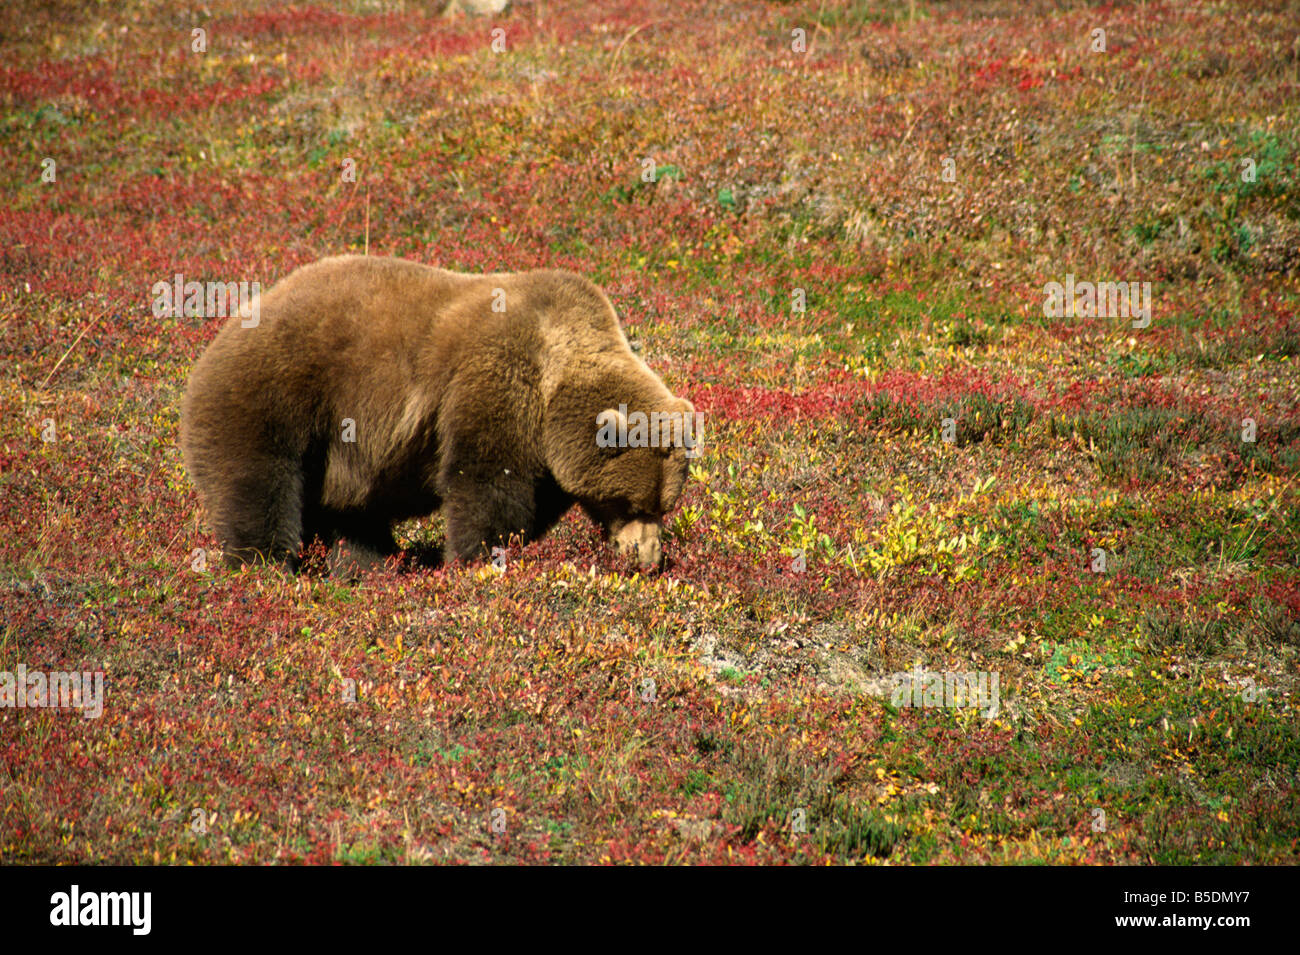 Alaskan brown bear grizzly grazing on tundra berries Denali National Park Alaska United States of America North America Stock Photo